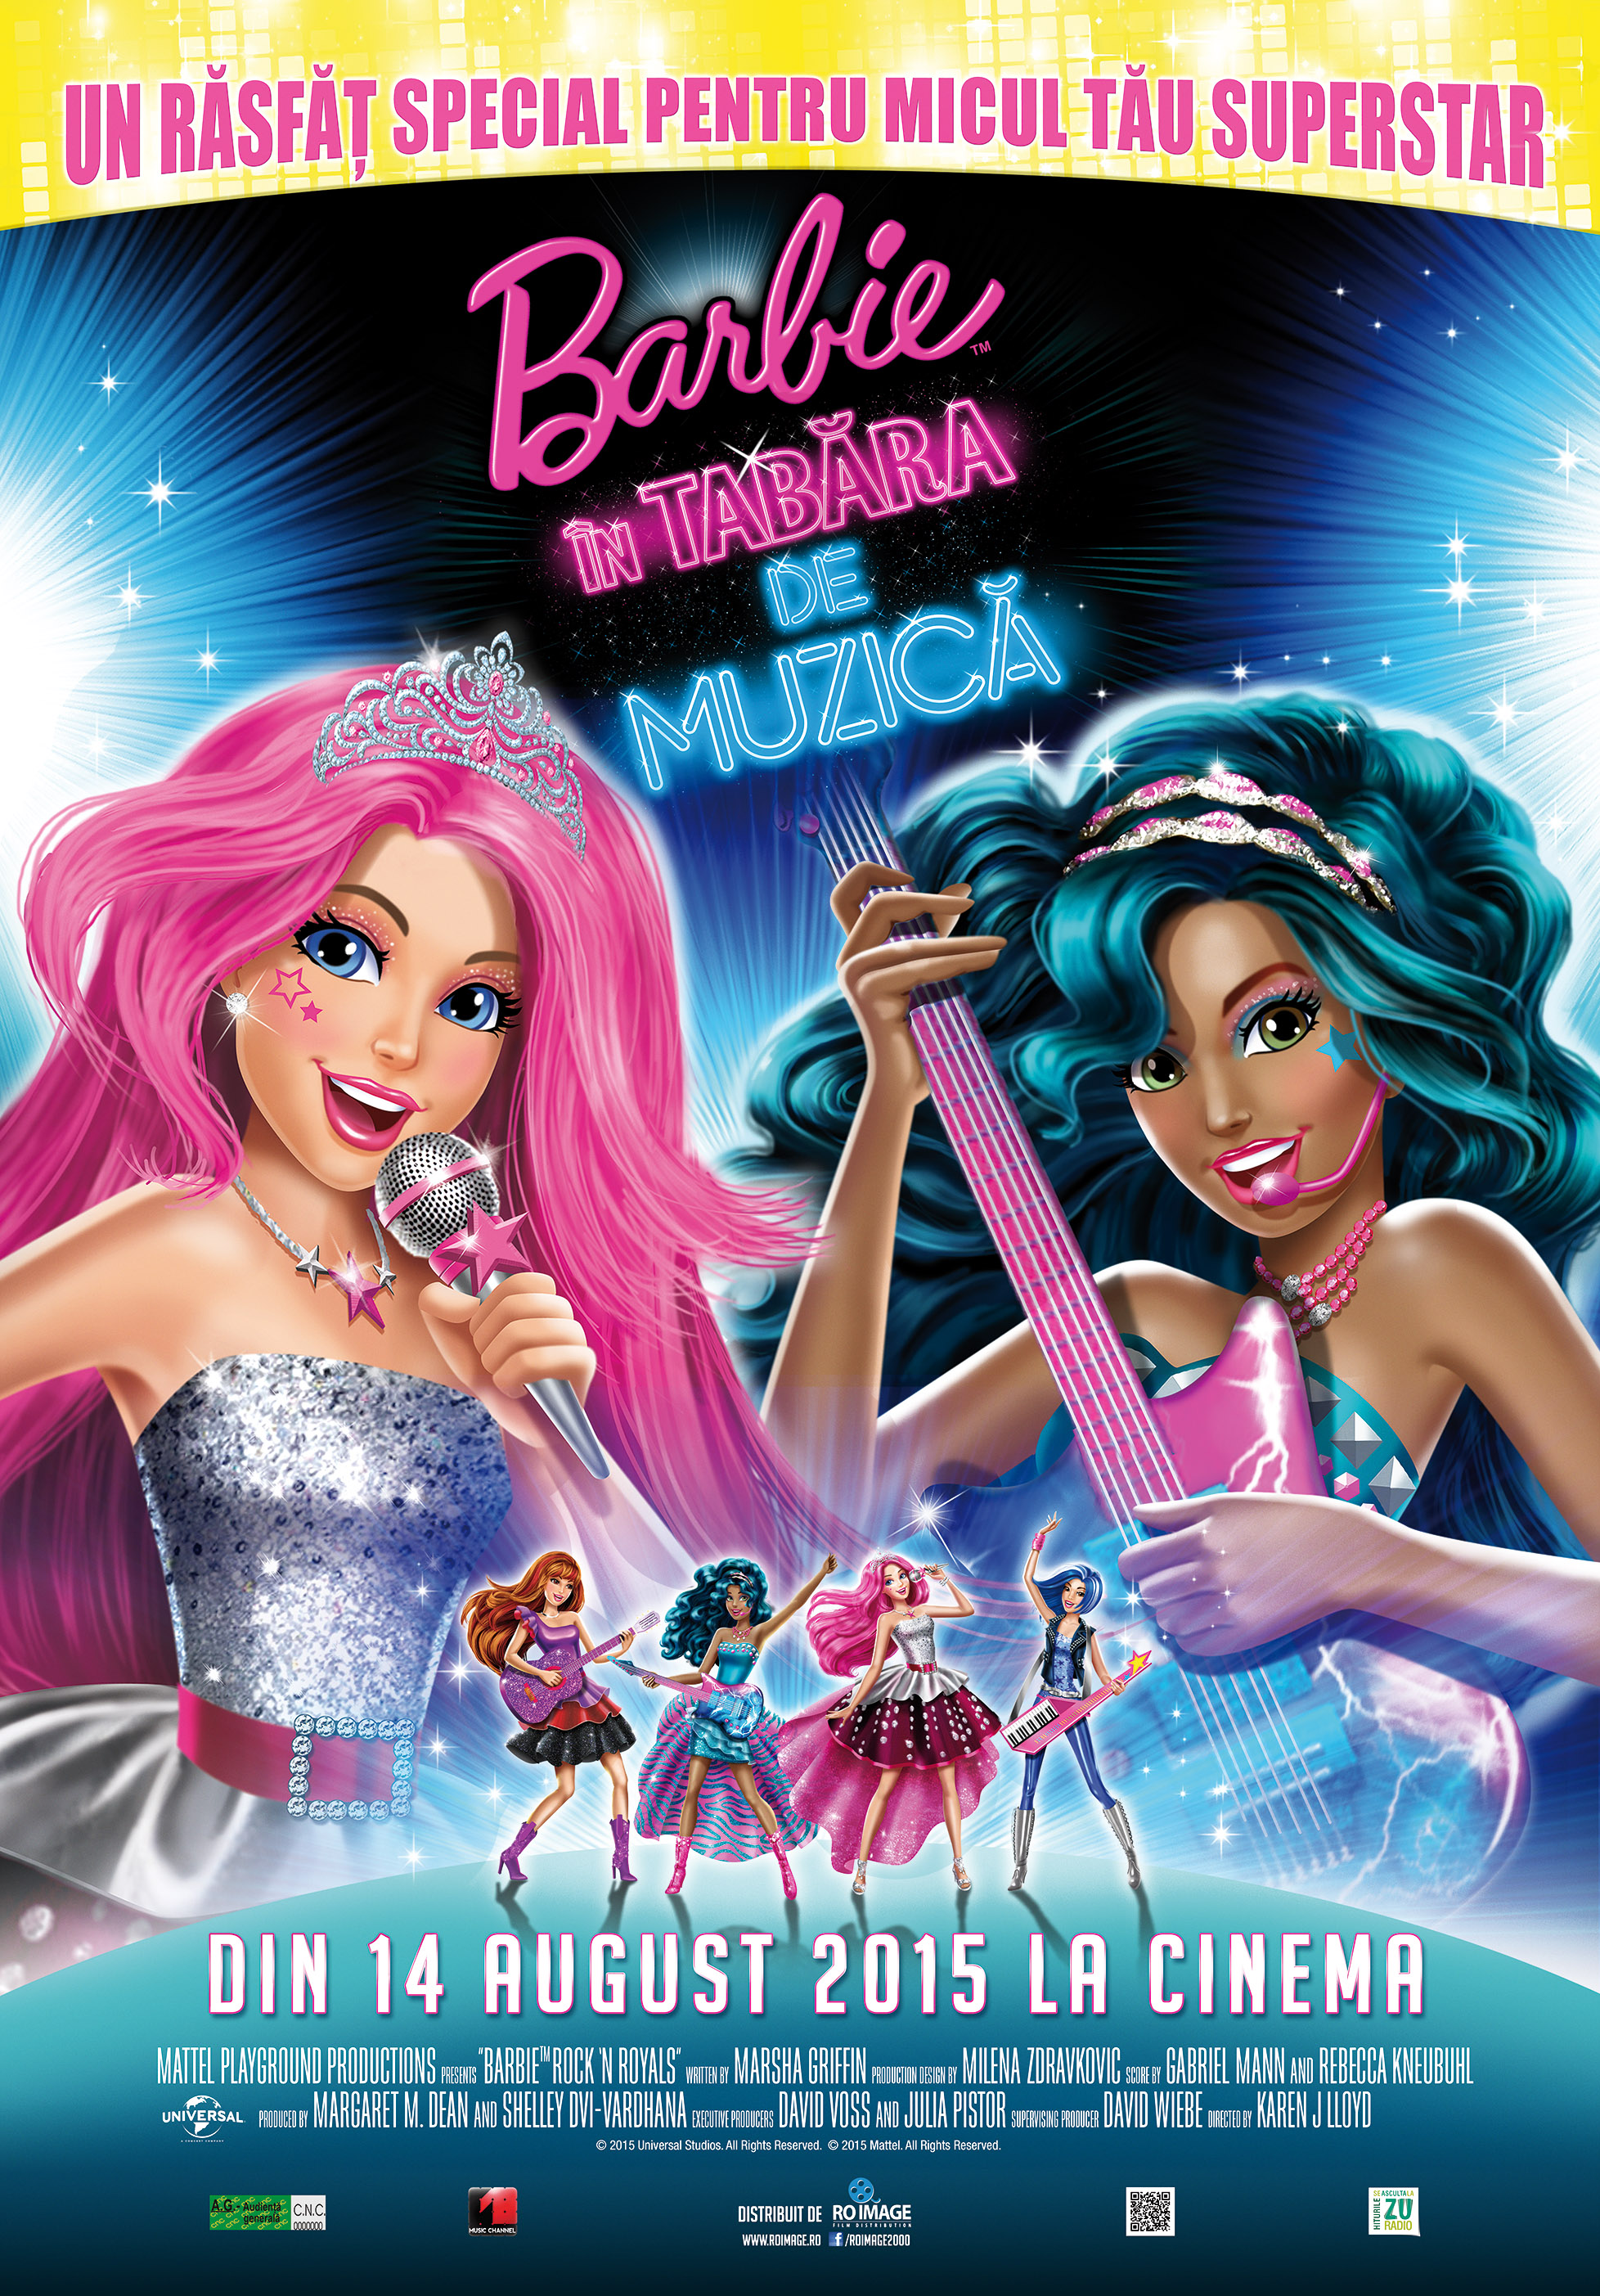 Barbie in Tabara de Muzica – 2D Dublat / Barbie in Rock'n Royals – 2D Dubbed (Premiera)